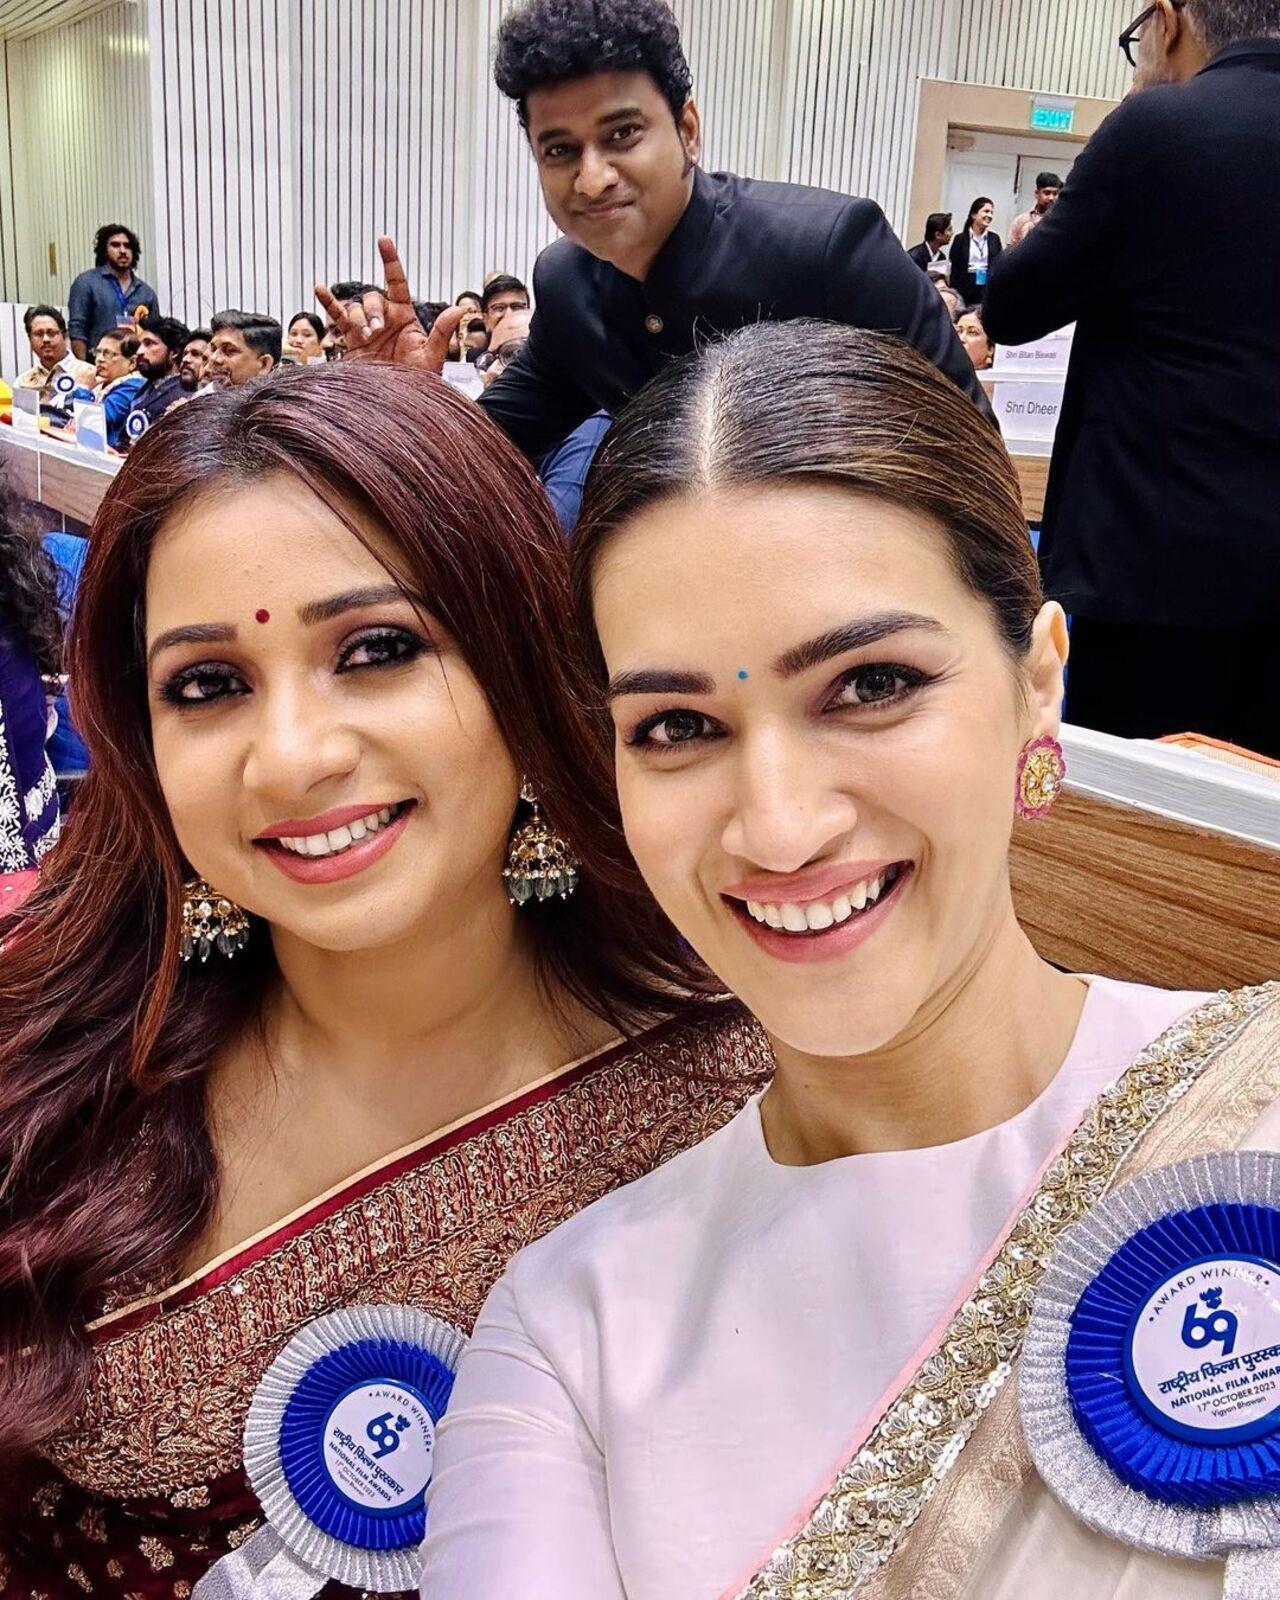 National Award winners Kriti Sanon and Shreya Ghoshal clicked a gorgeous selfie